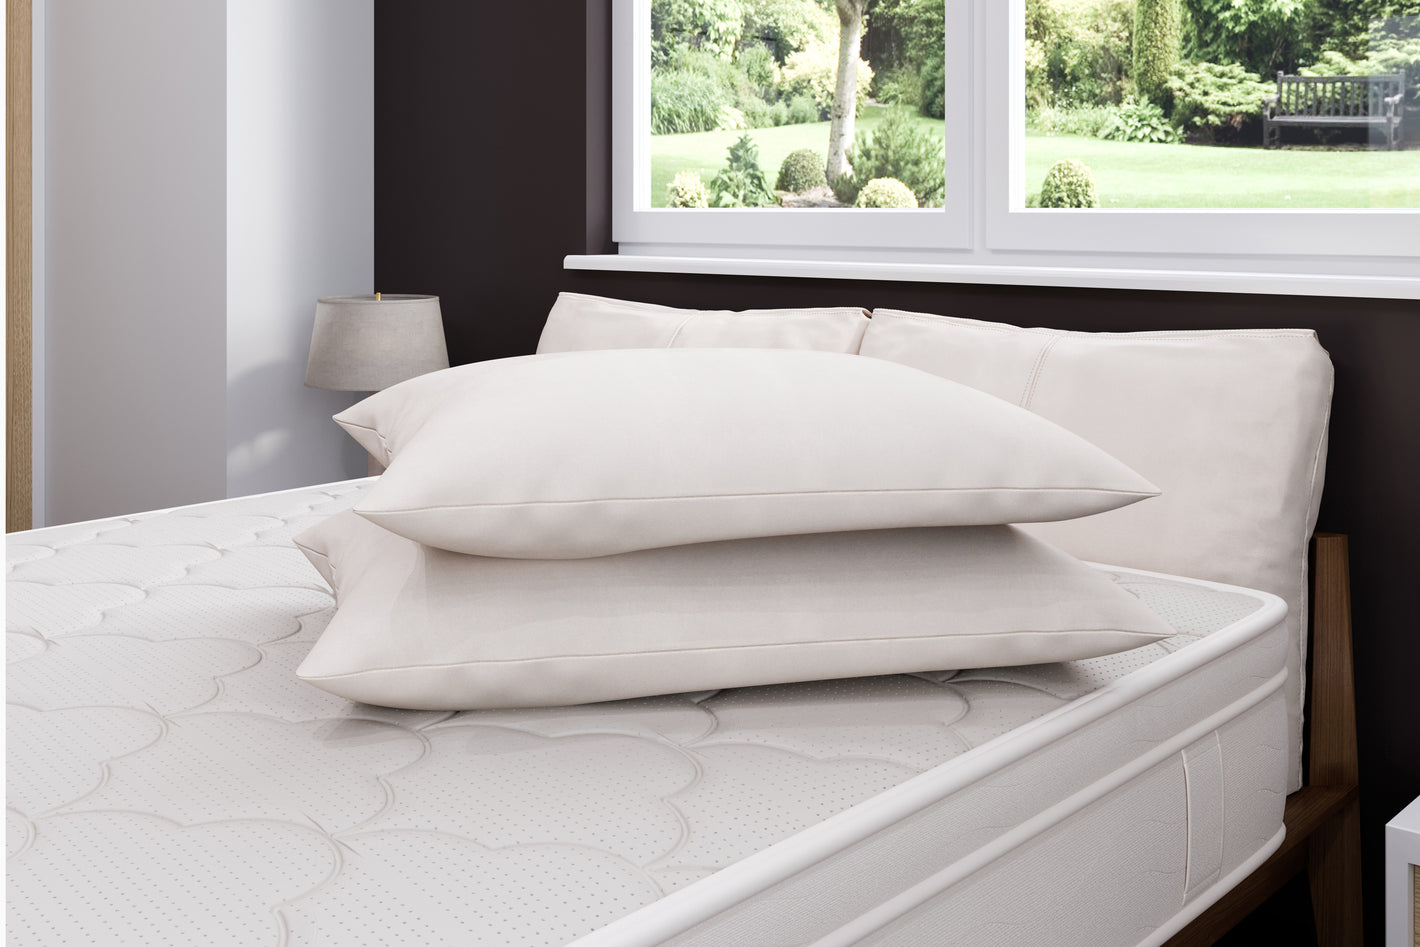 Certified organic bedding pillows sheets blankets comforter mattress pad made in USA